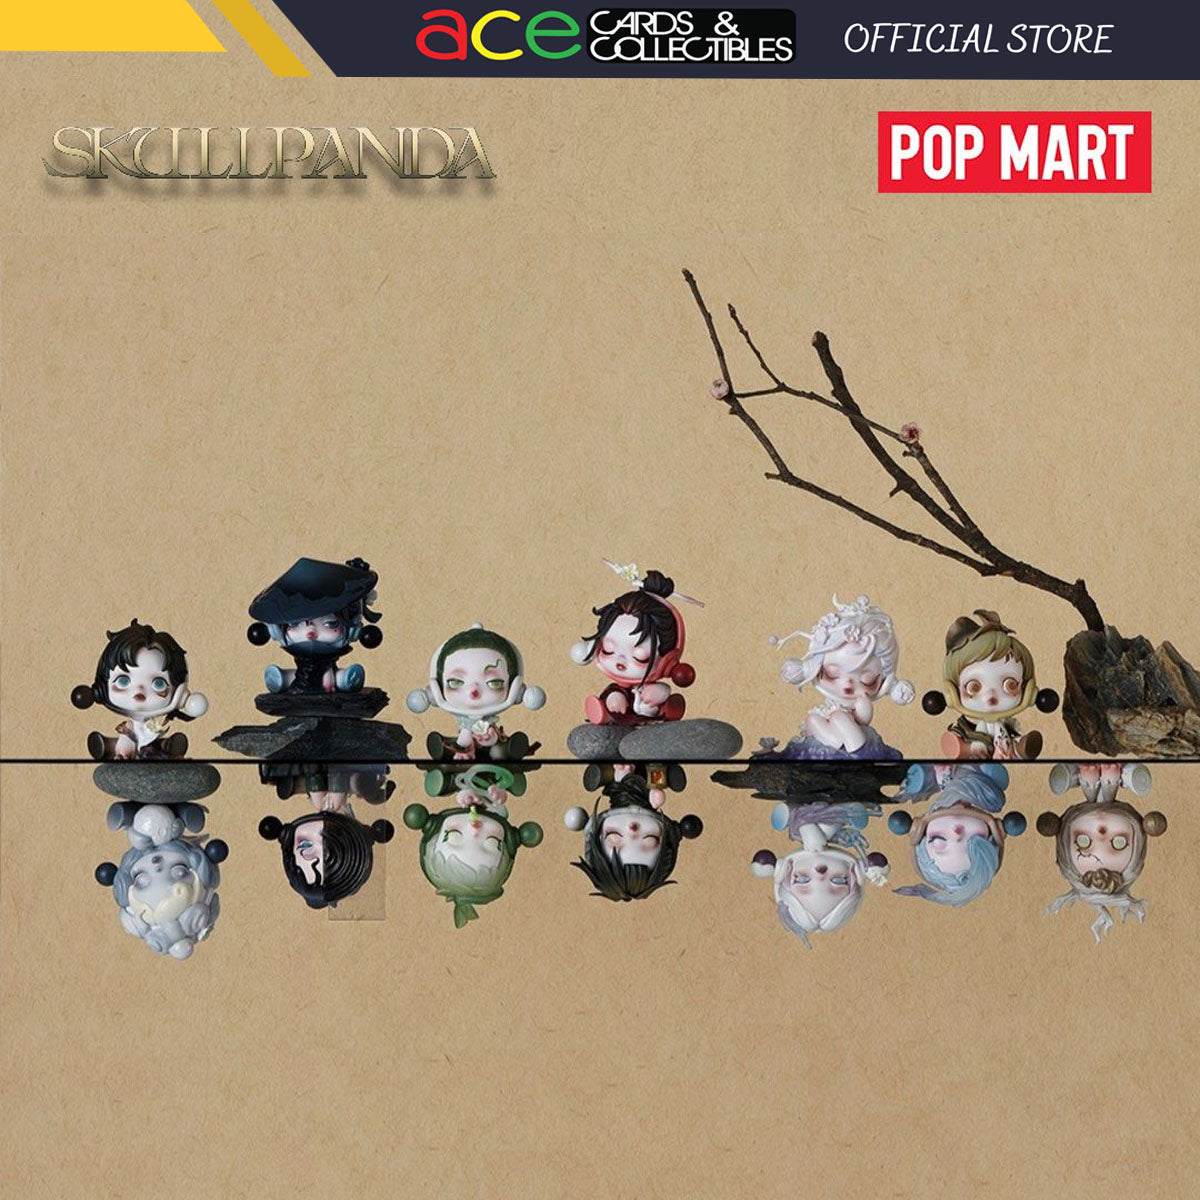 POP MART Skullpanda The Ink Plum Blossom Series-Single Box (Random)-Pop Mart-Ace Cards & Collectibles